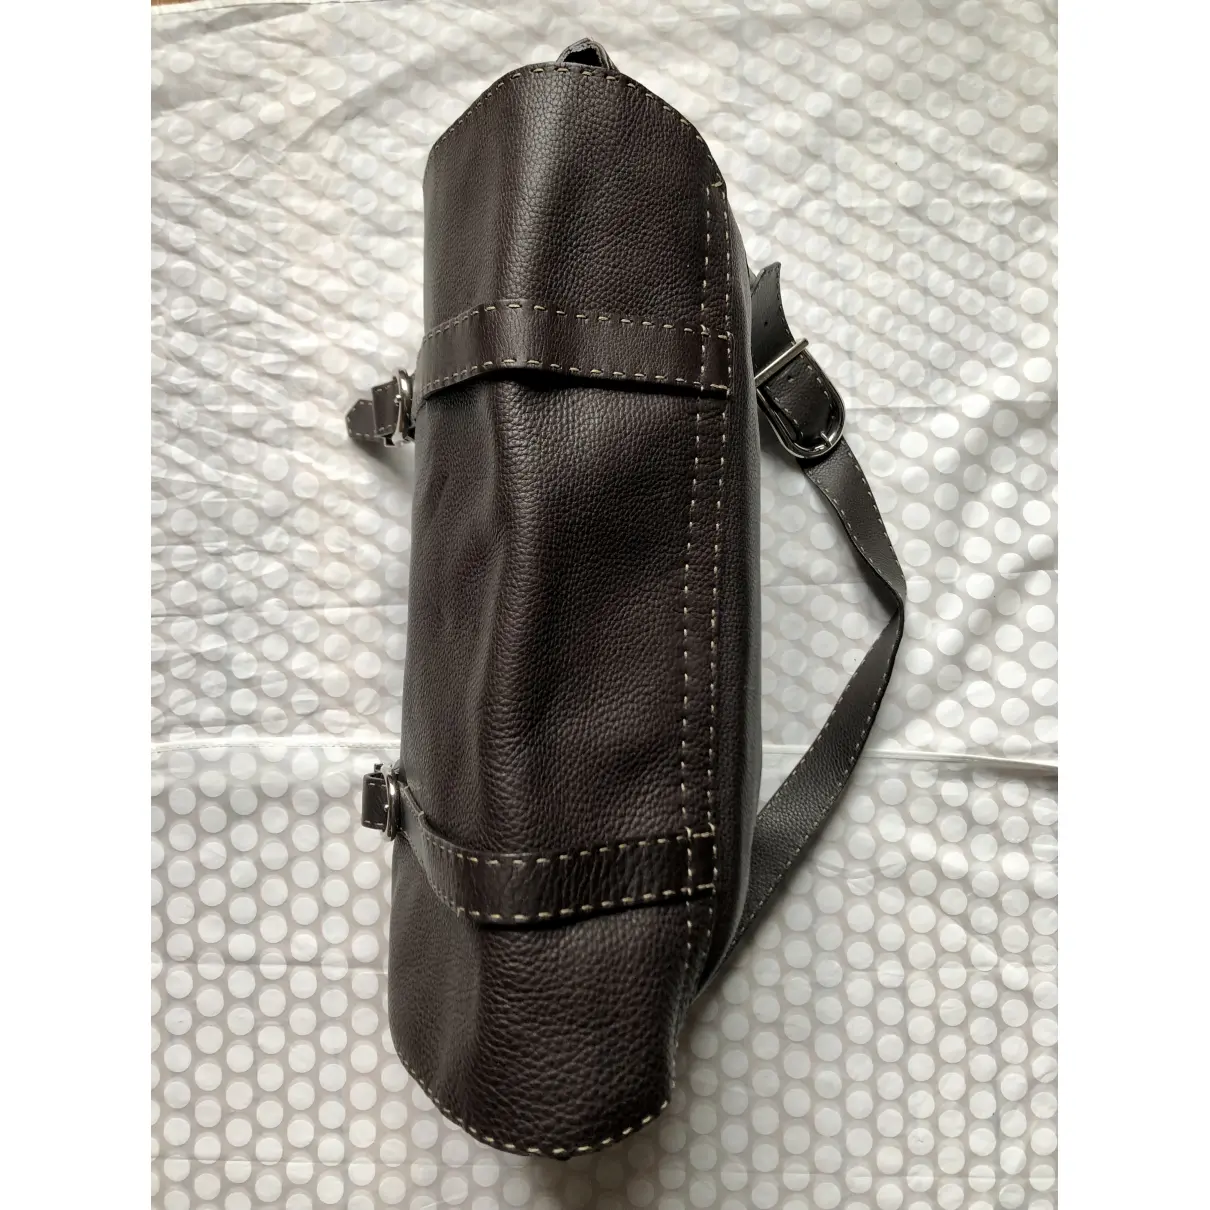 Buy Fendi Leather satchel online